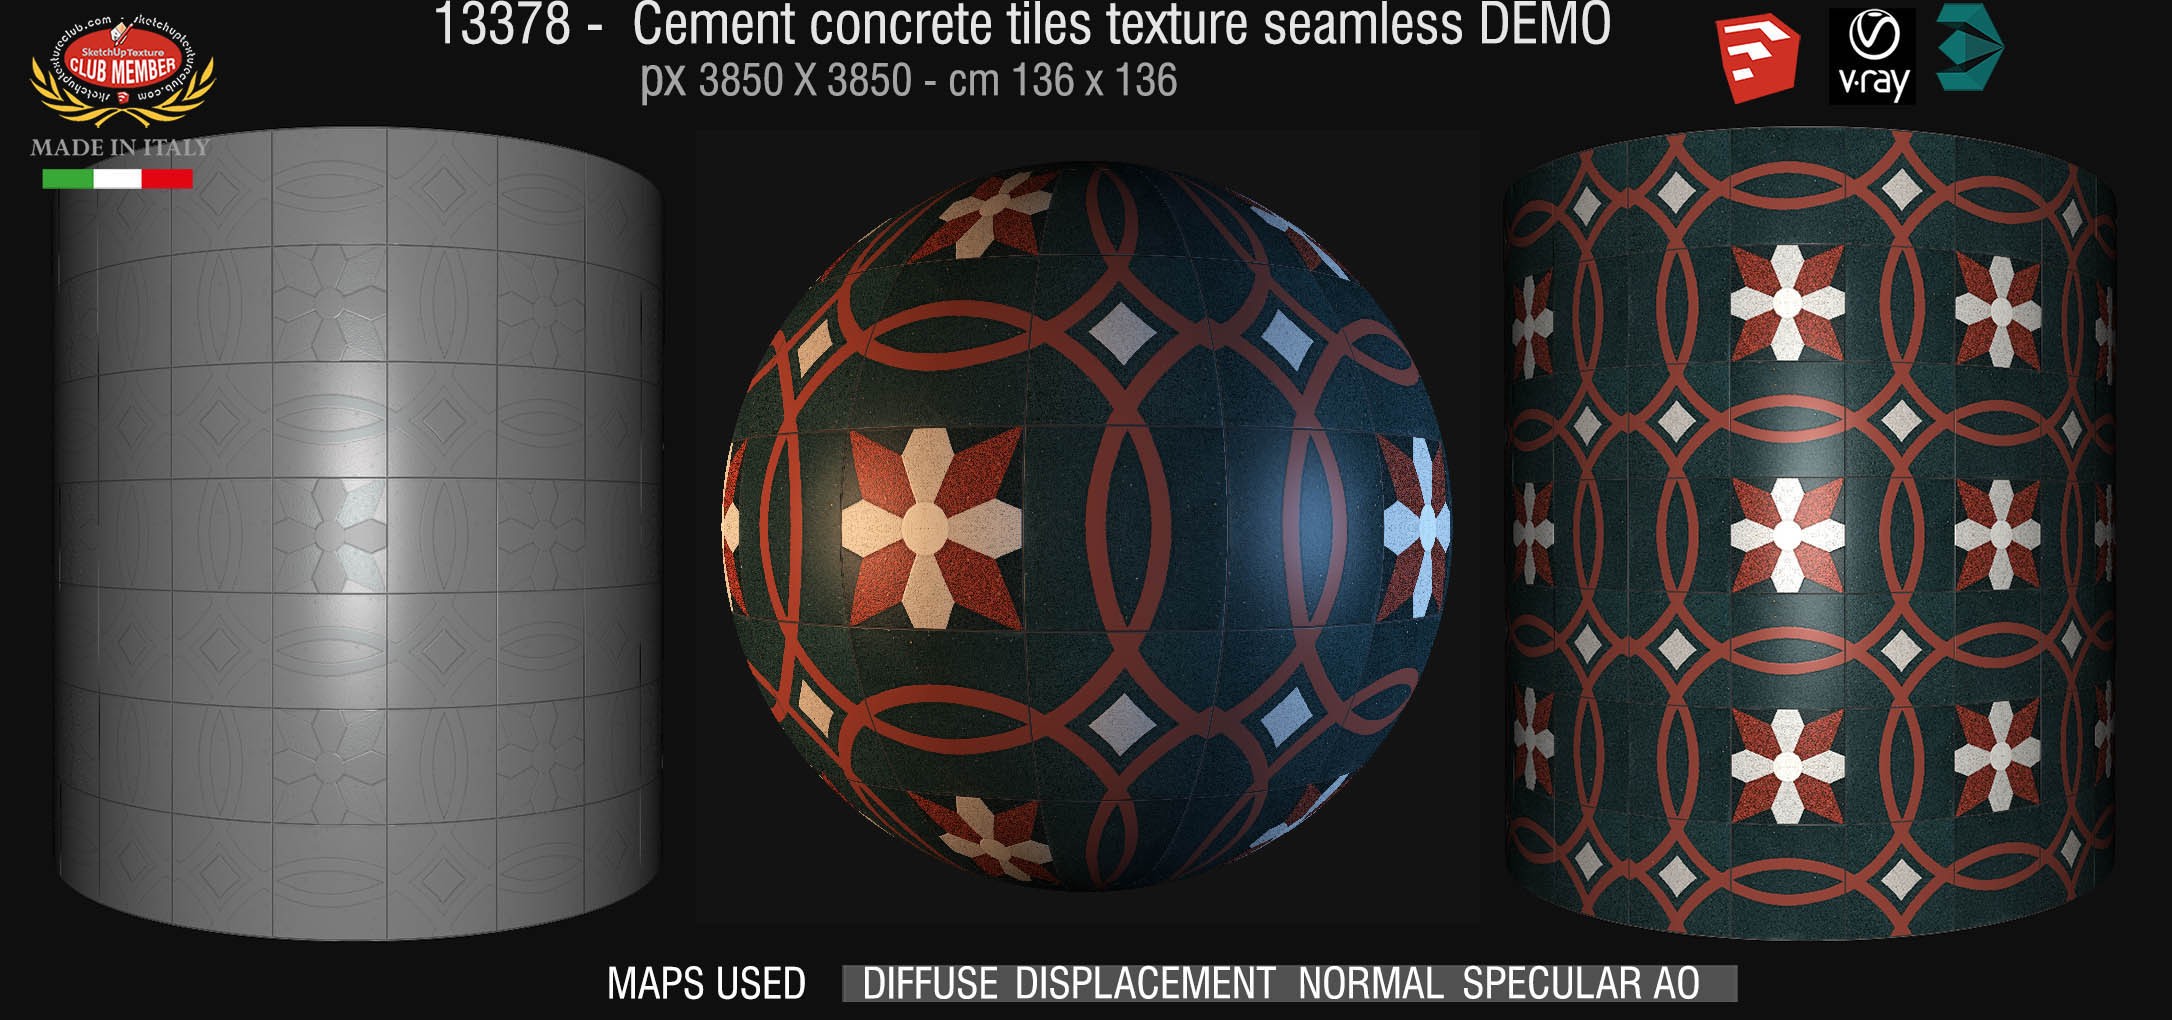 13378 retrò cementine tiles - texture seamless + maps DEMO